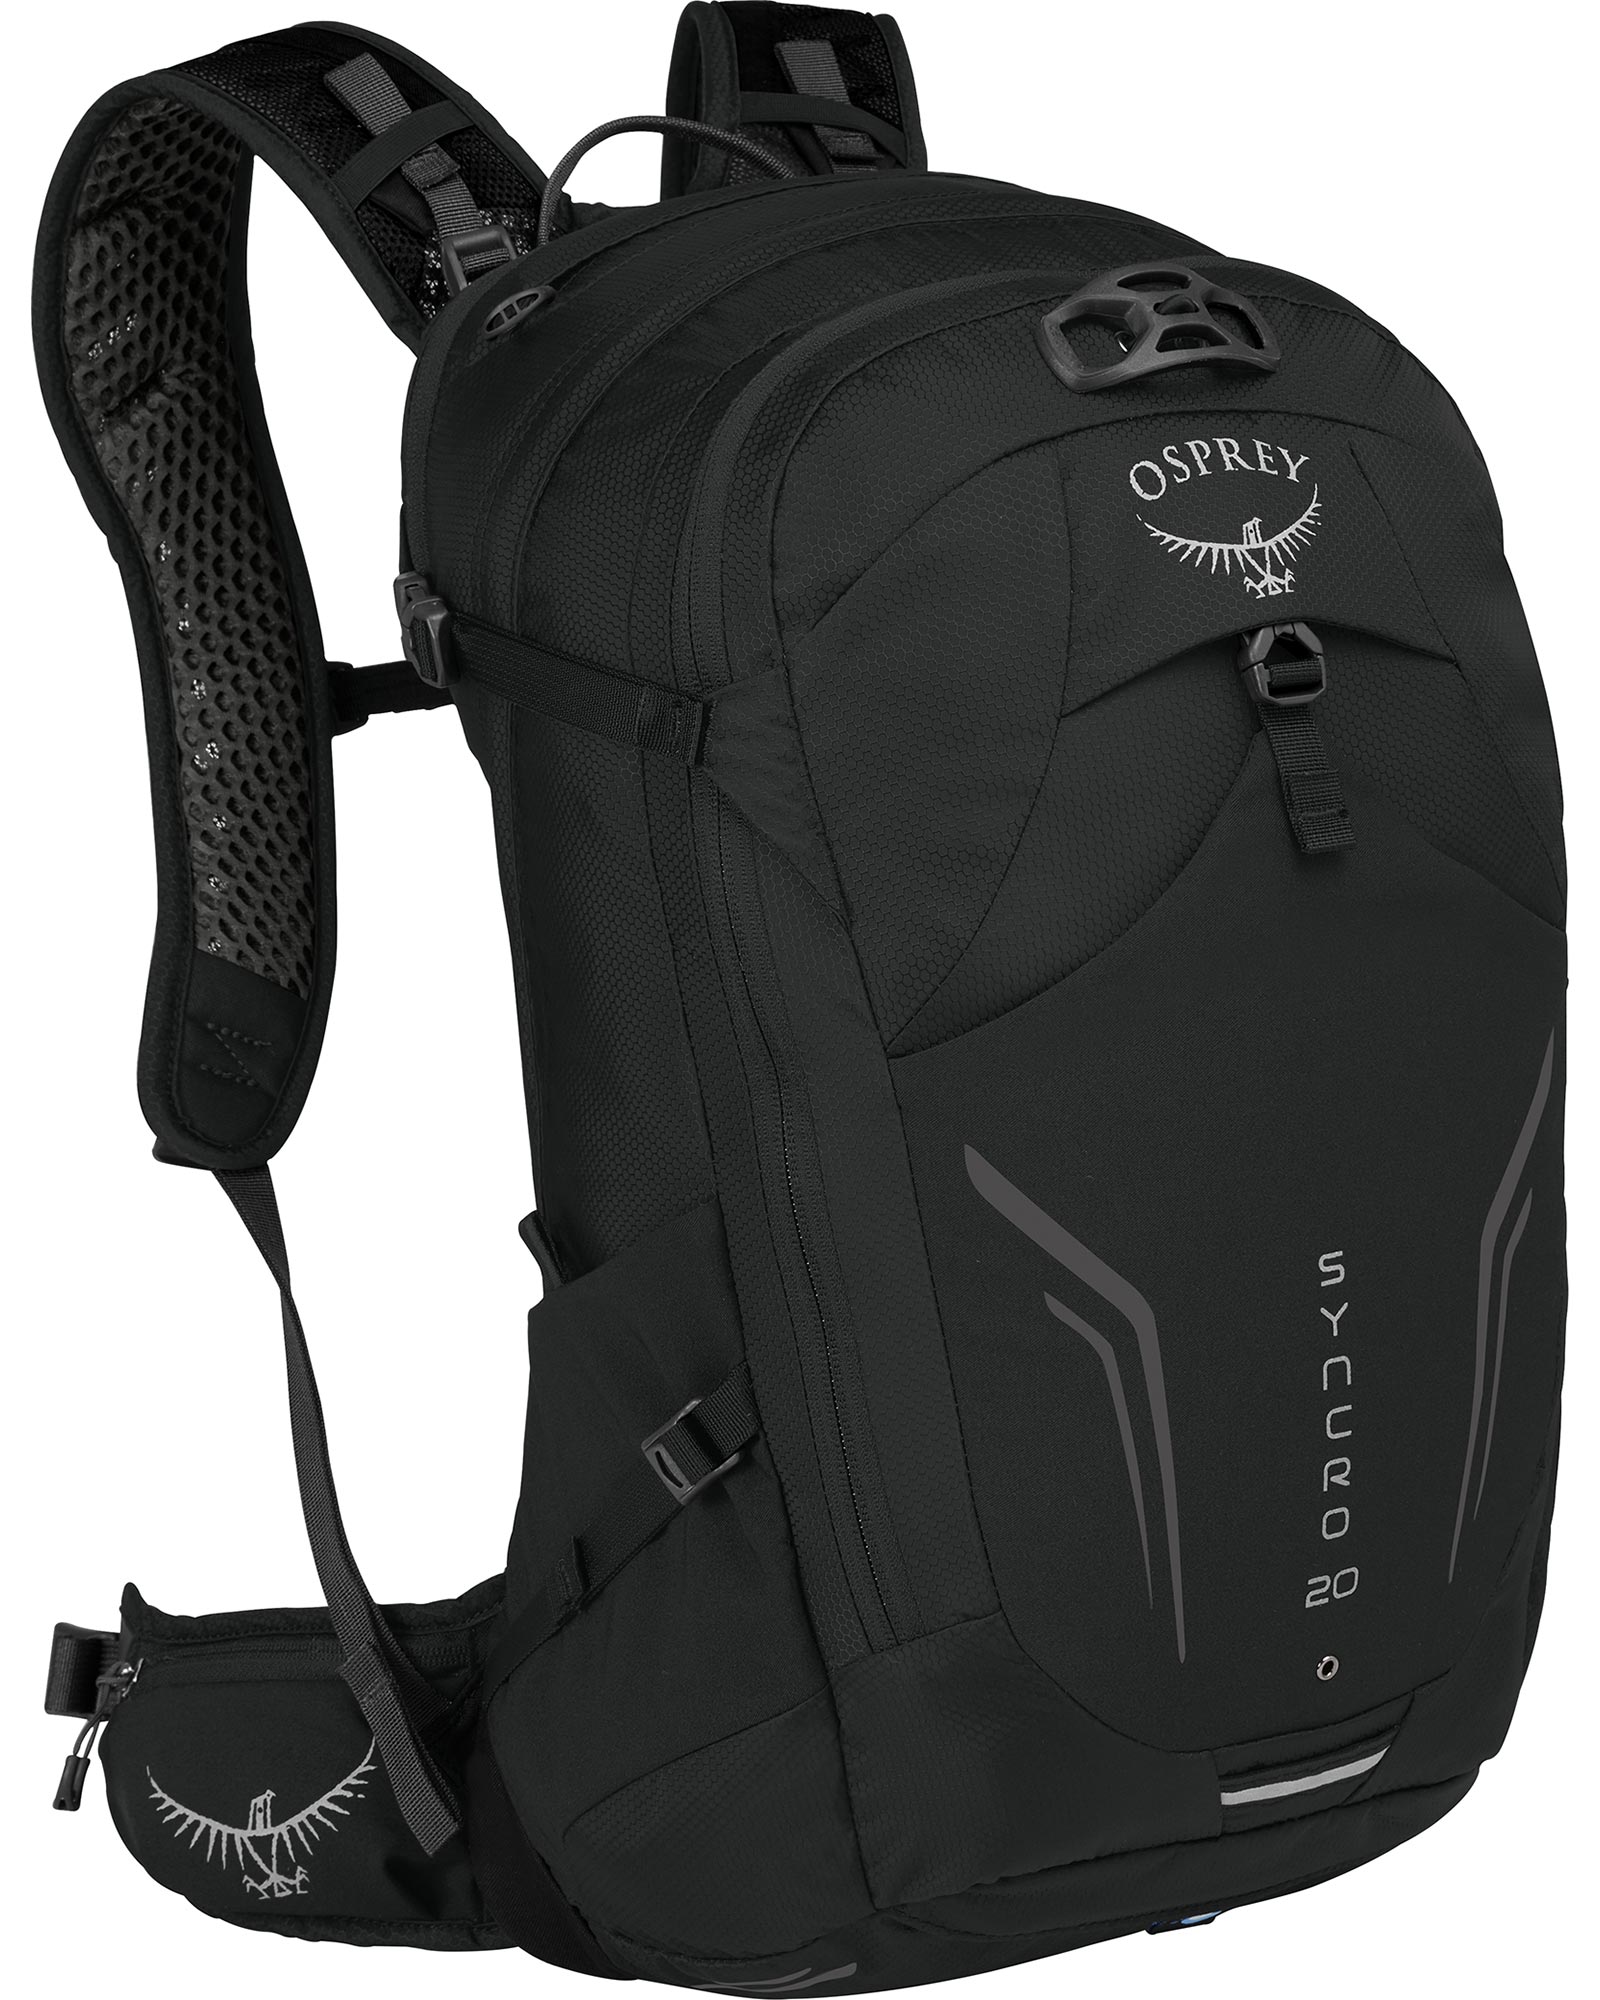 Osprey Syncro 20 Backpack - black